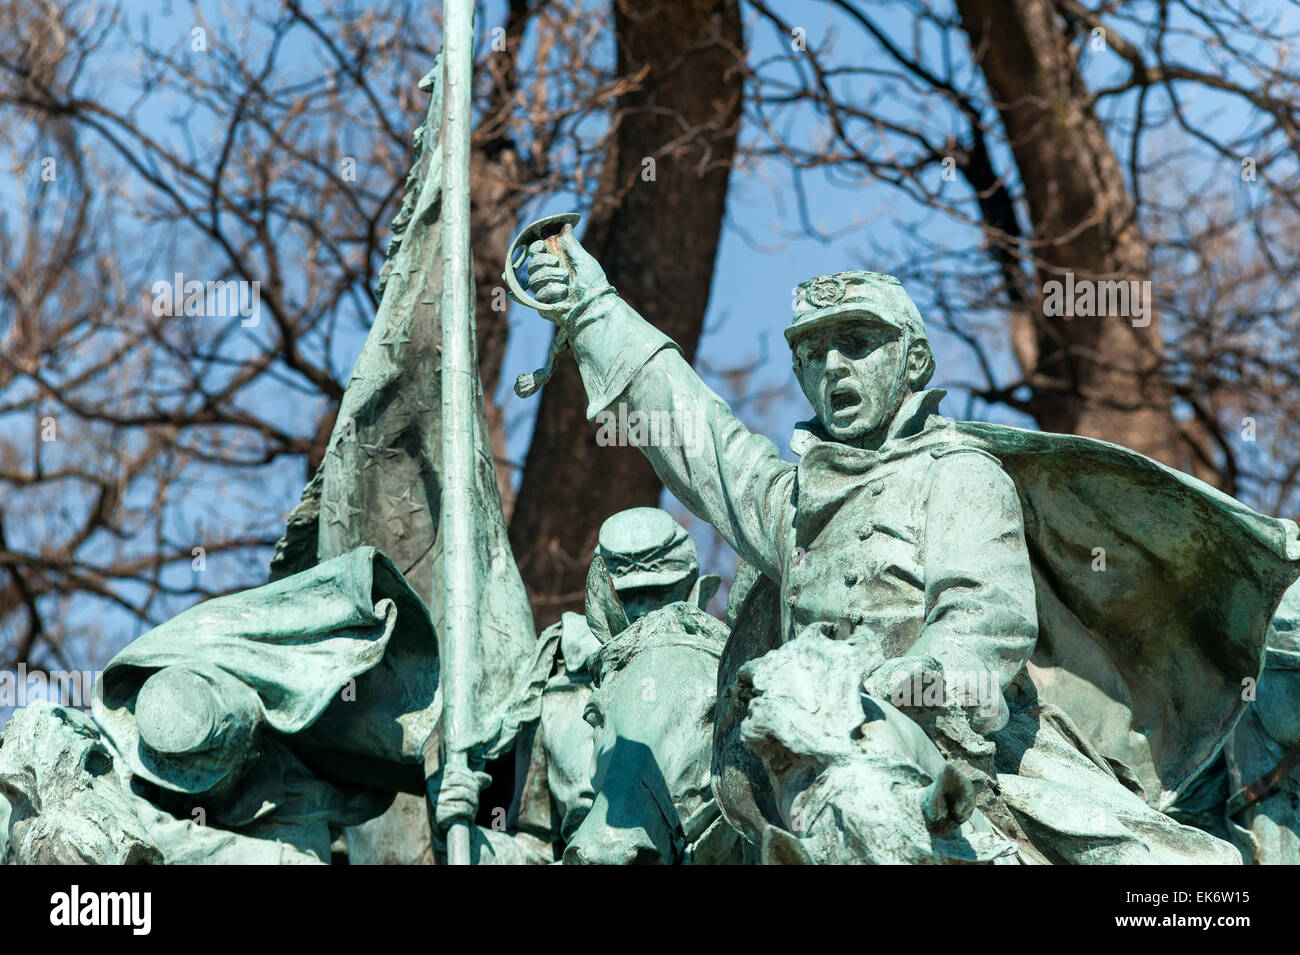 Civil War Memorial Statue near the Ulysses S. Grant Memorial in front o the US Capitol Building Stock Photo